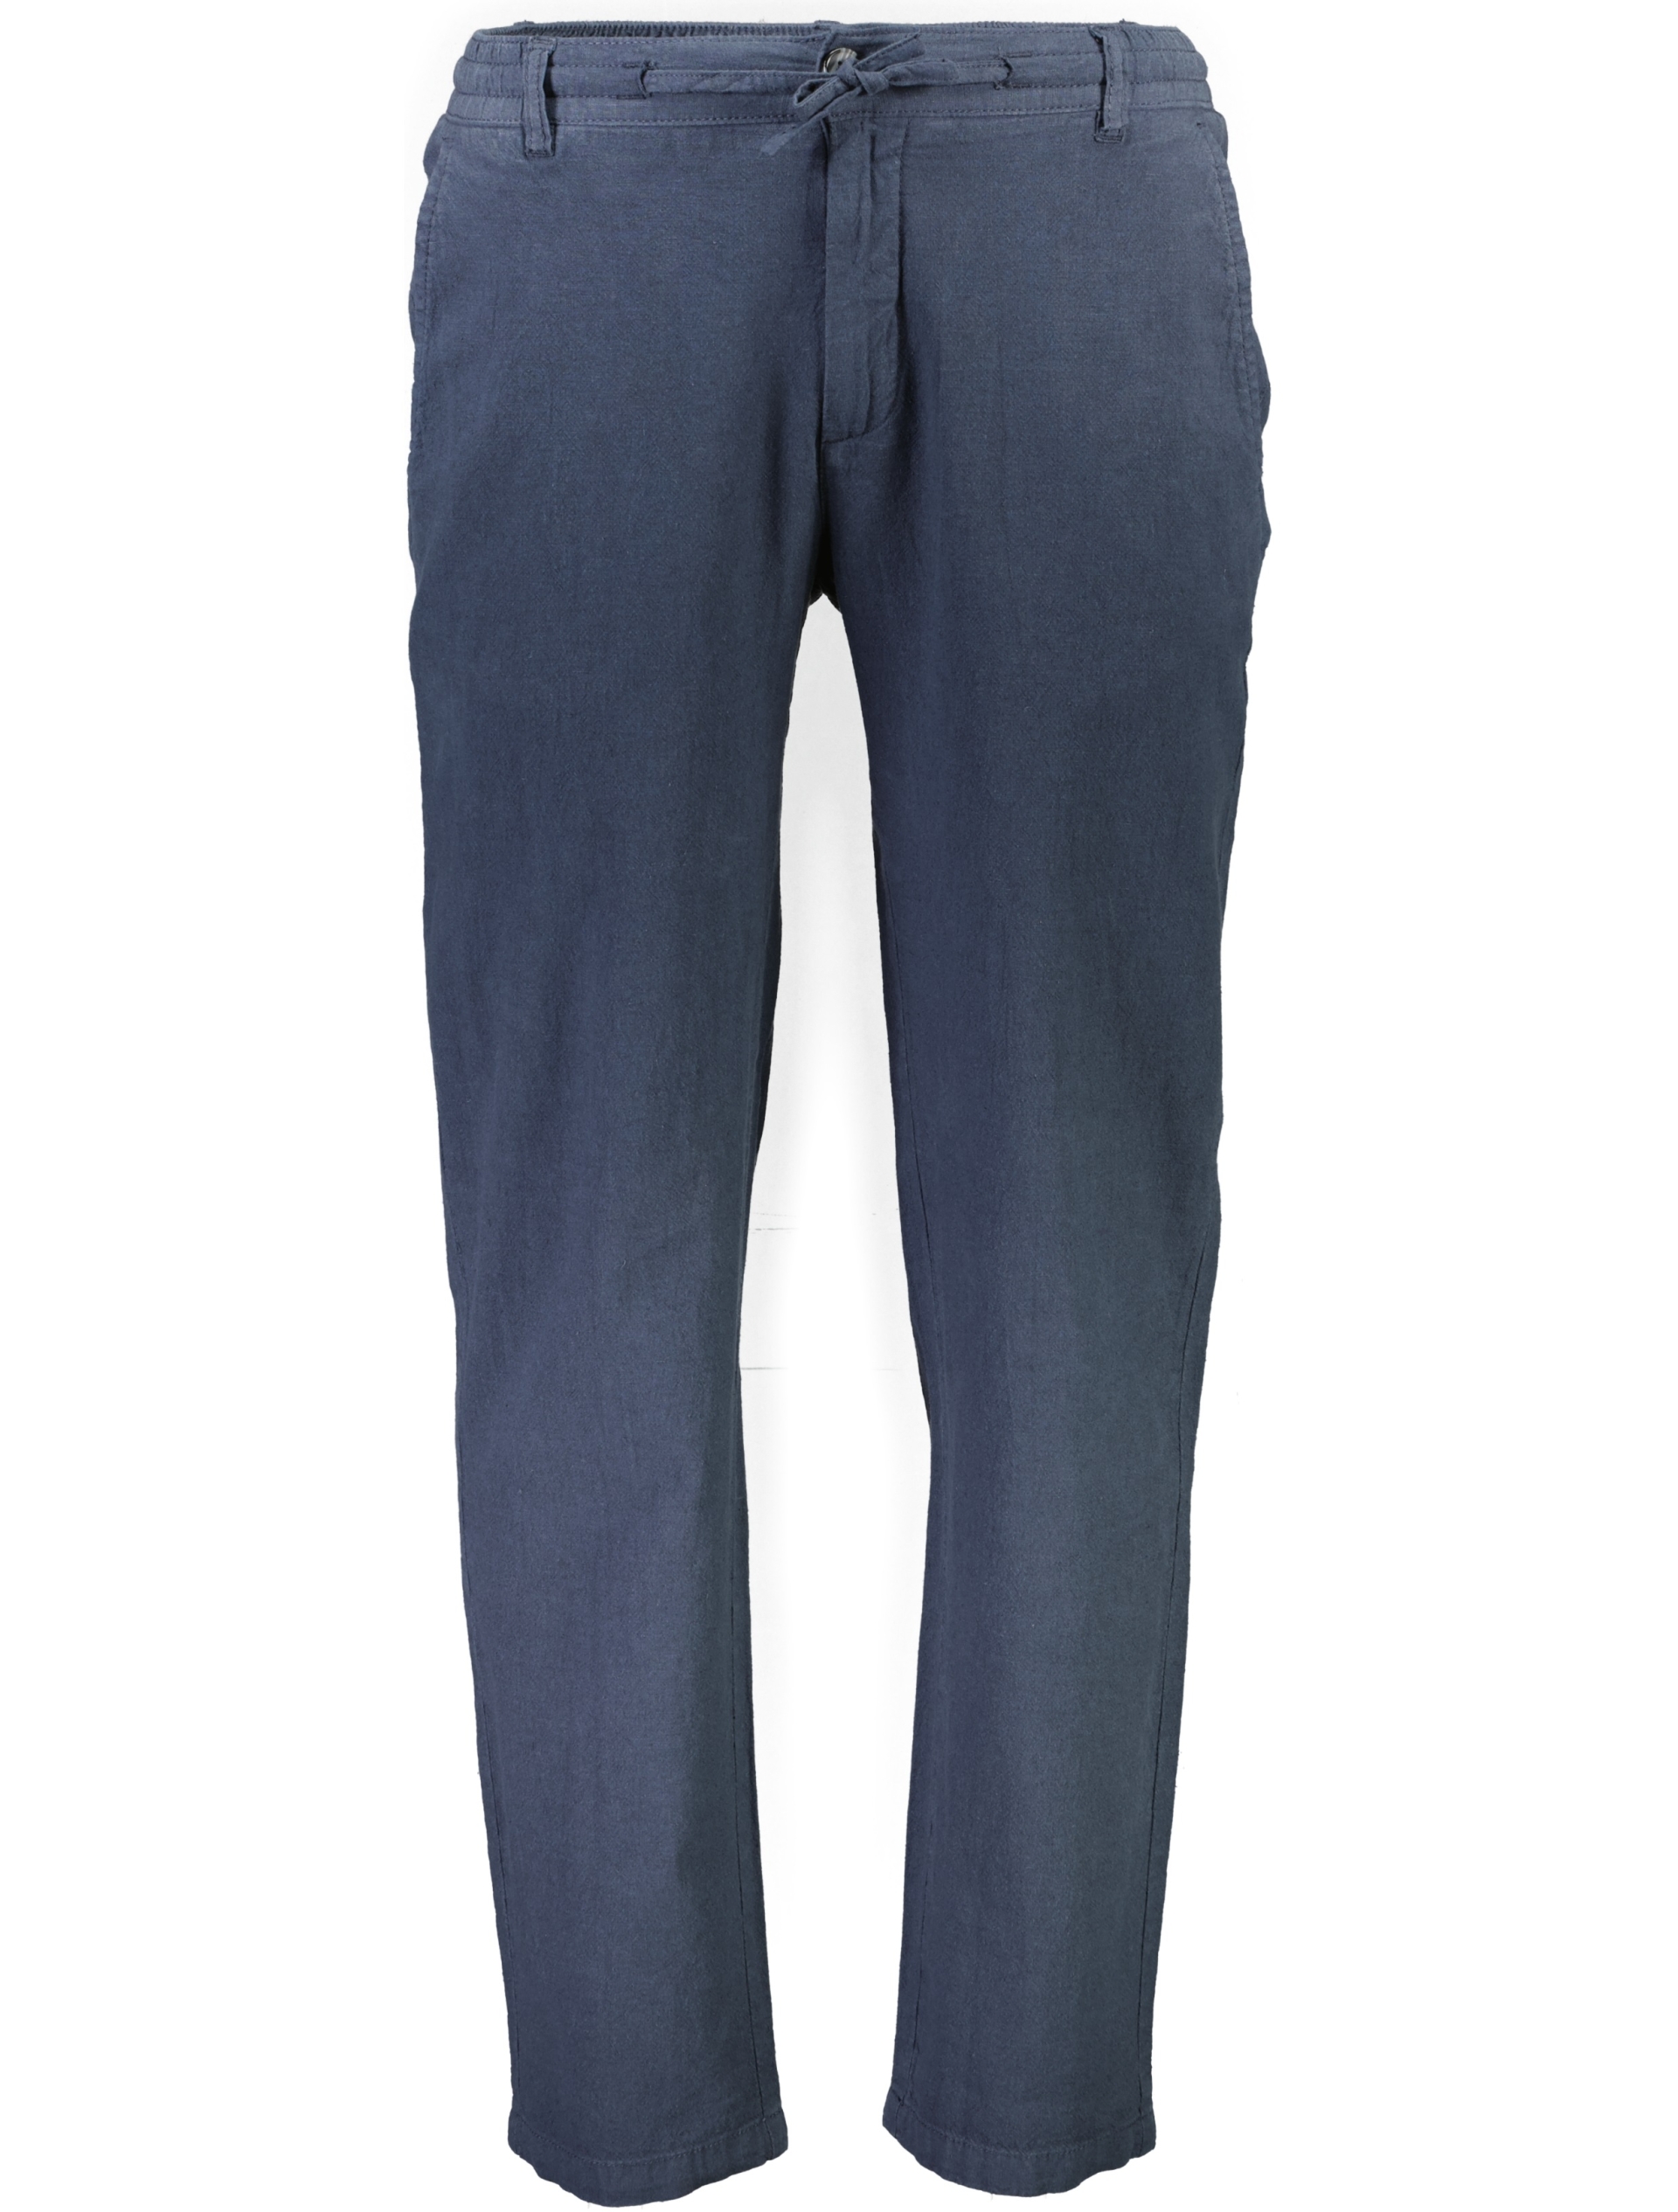 Lindbergh Linen pants blue / navy